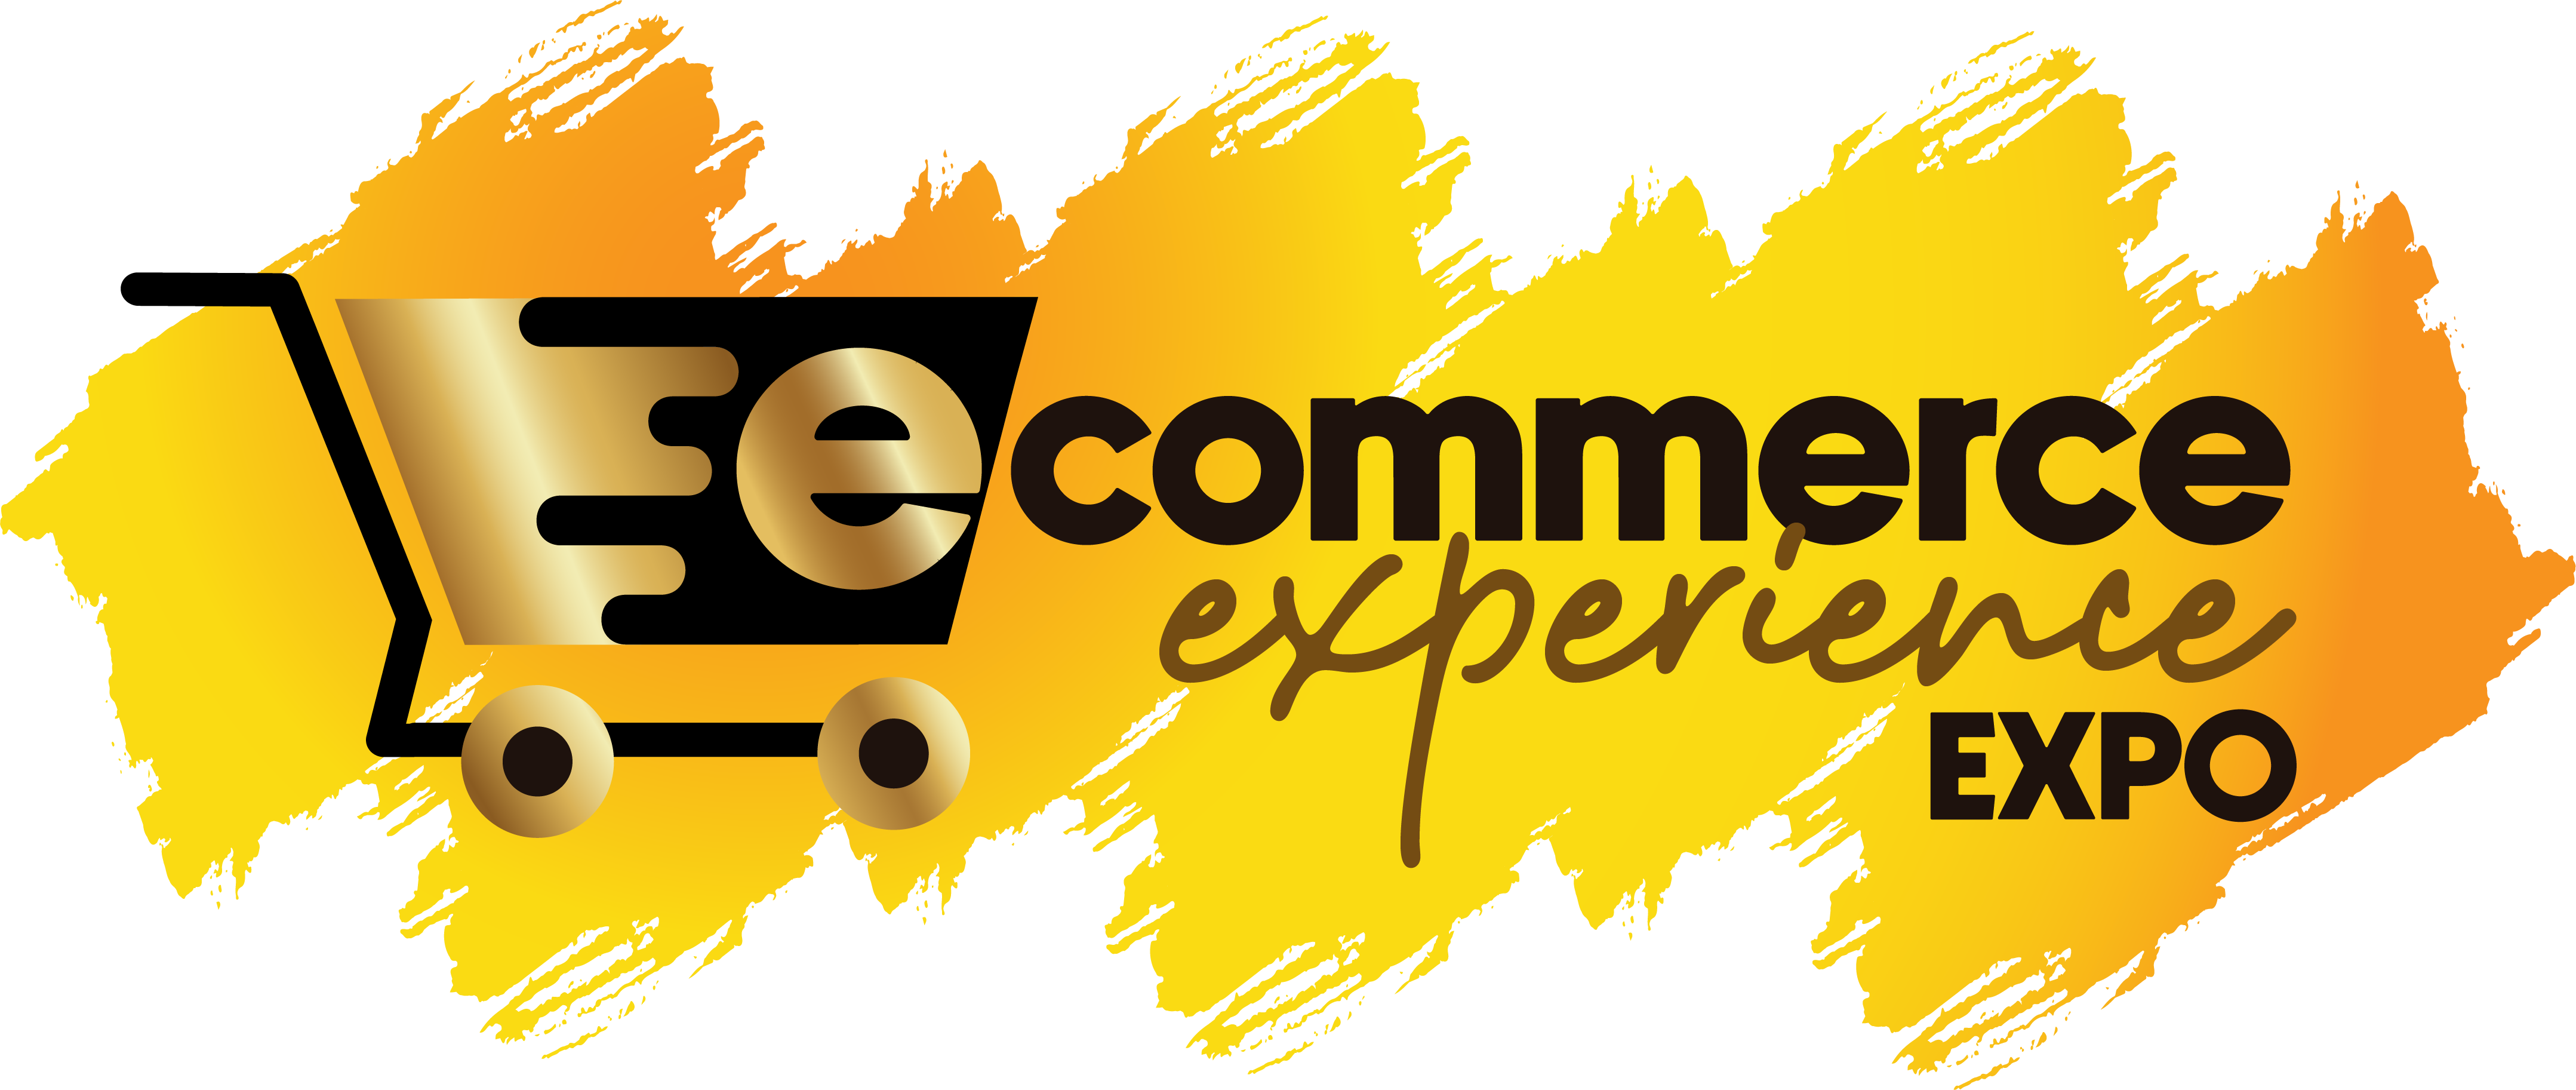 Expo E-Commerce Experience 